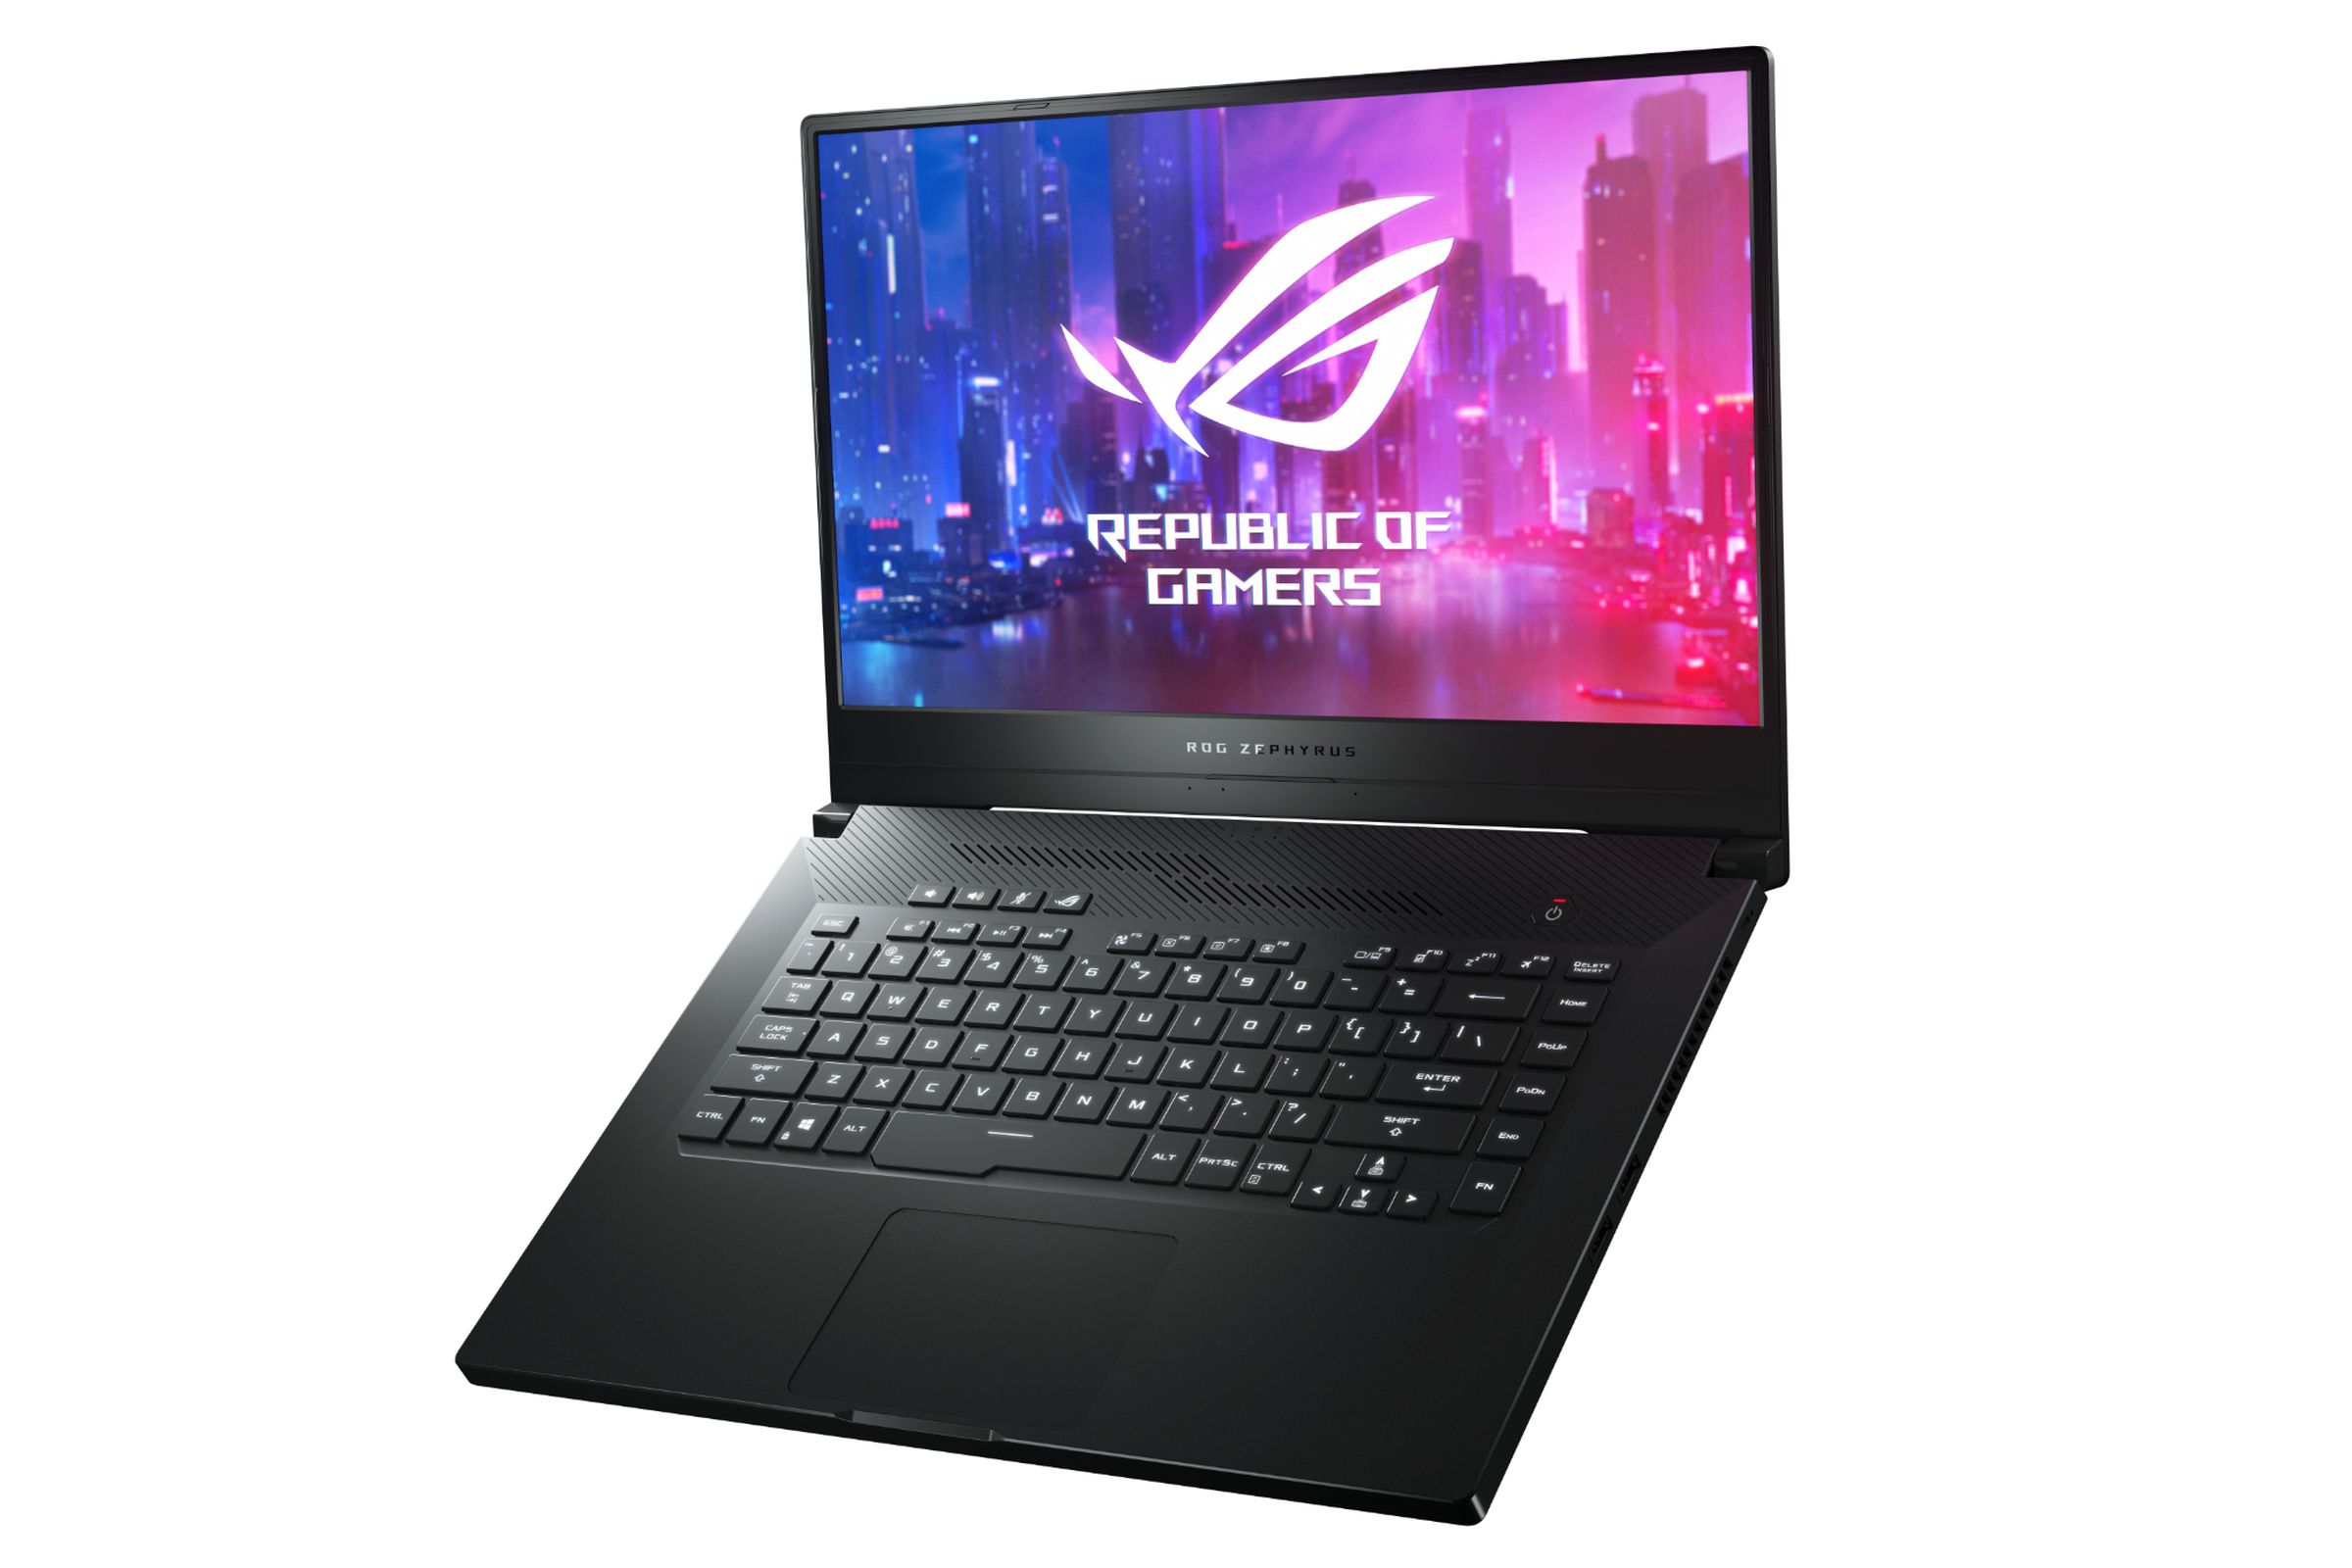 Asus’ new Zephyrus G gaming laptop